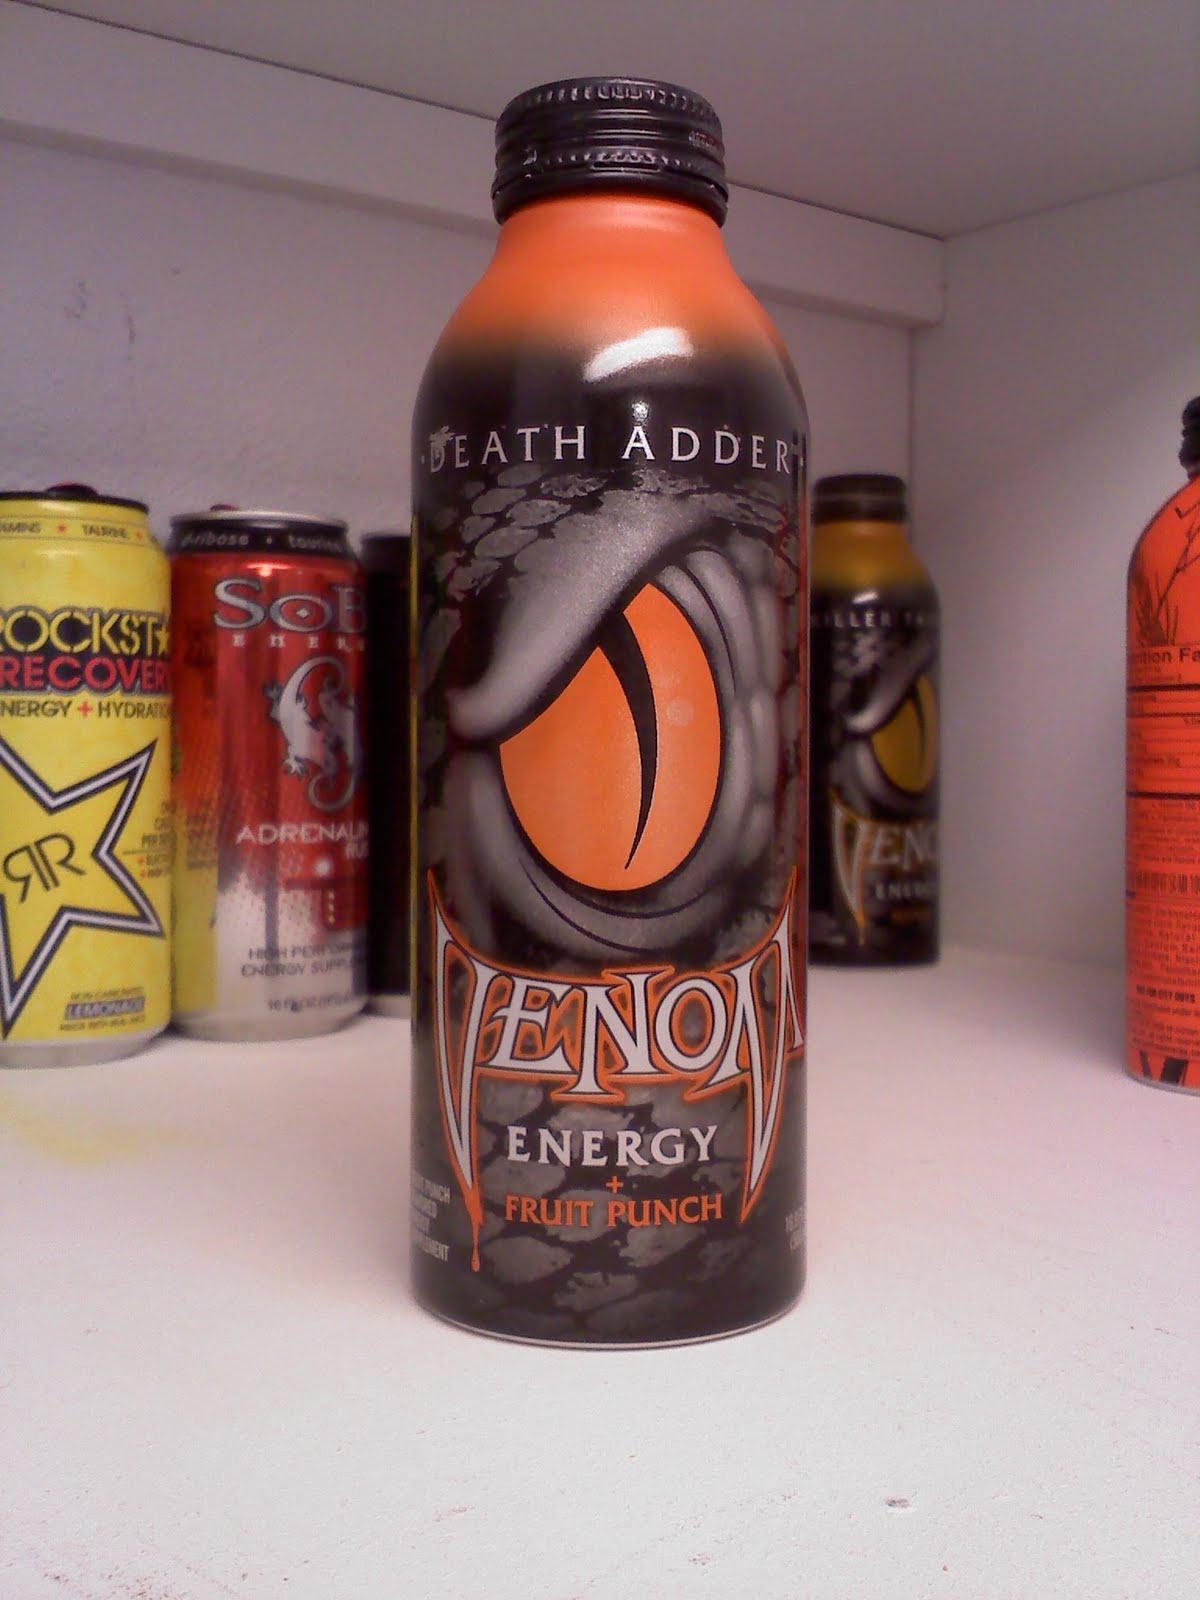 Venom Energy Drink Logo - CAFFEINE!: Review for Venom Energy--Death Adder